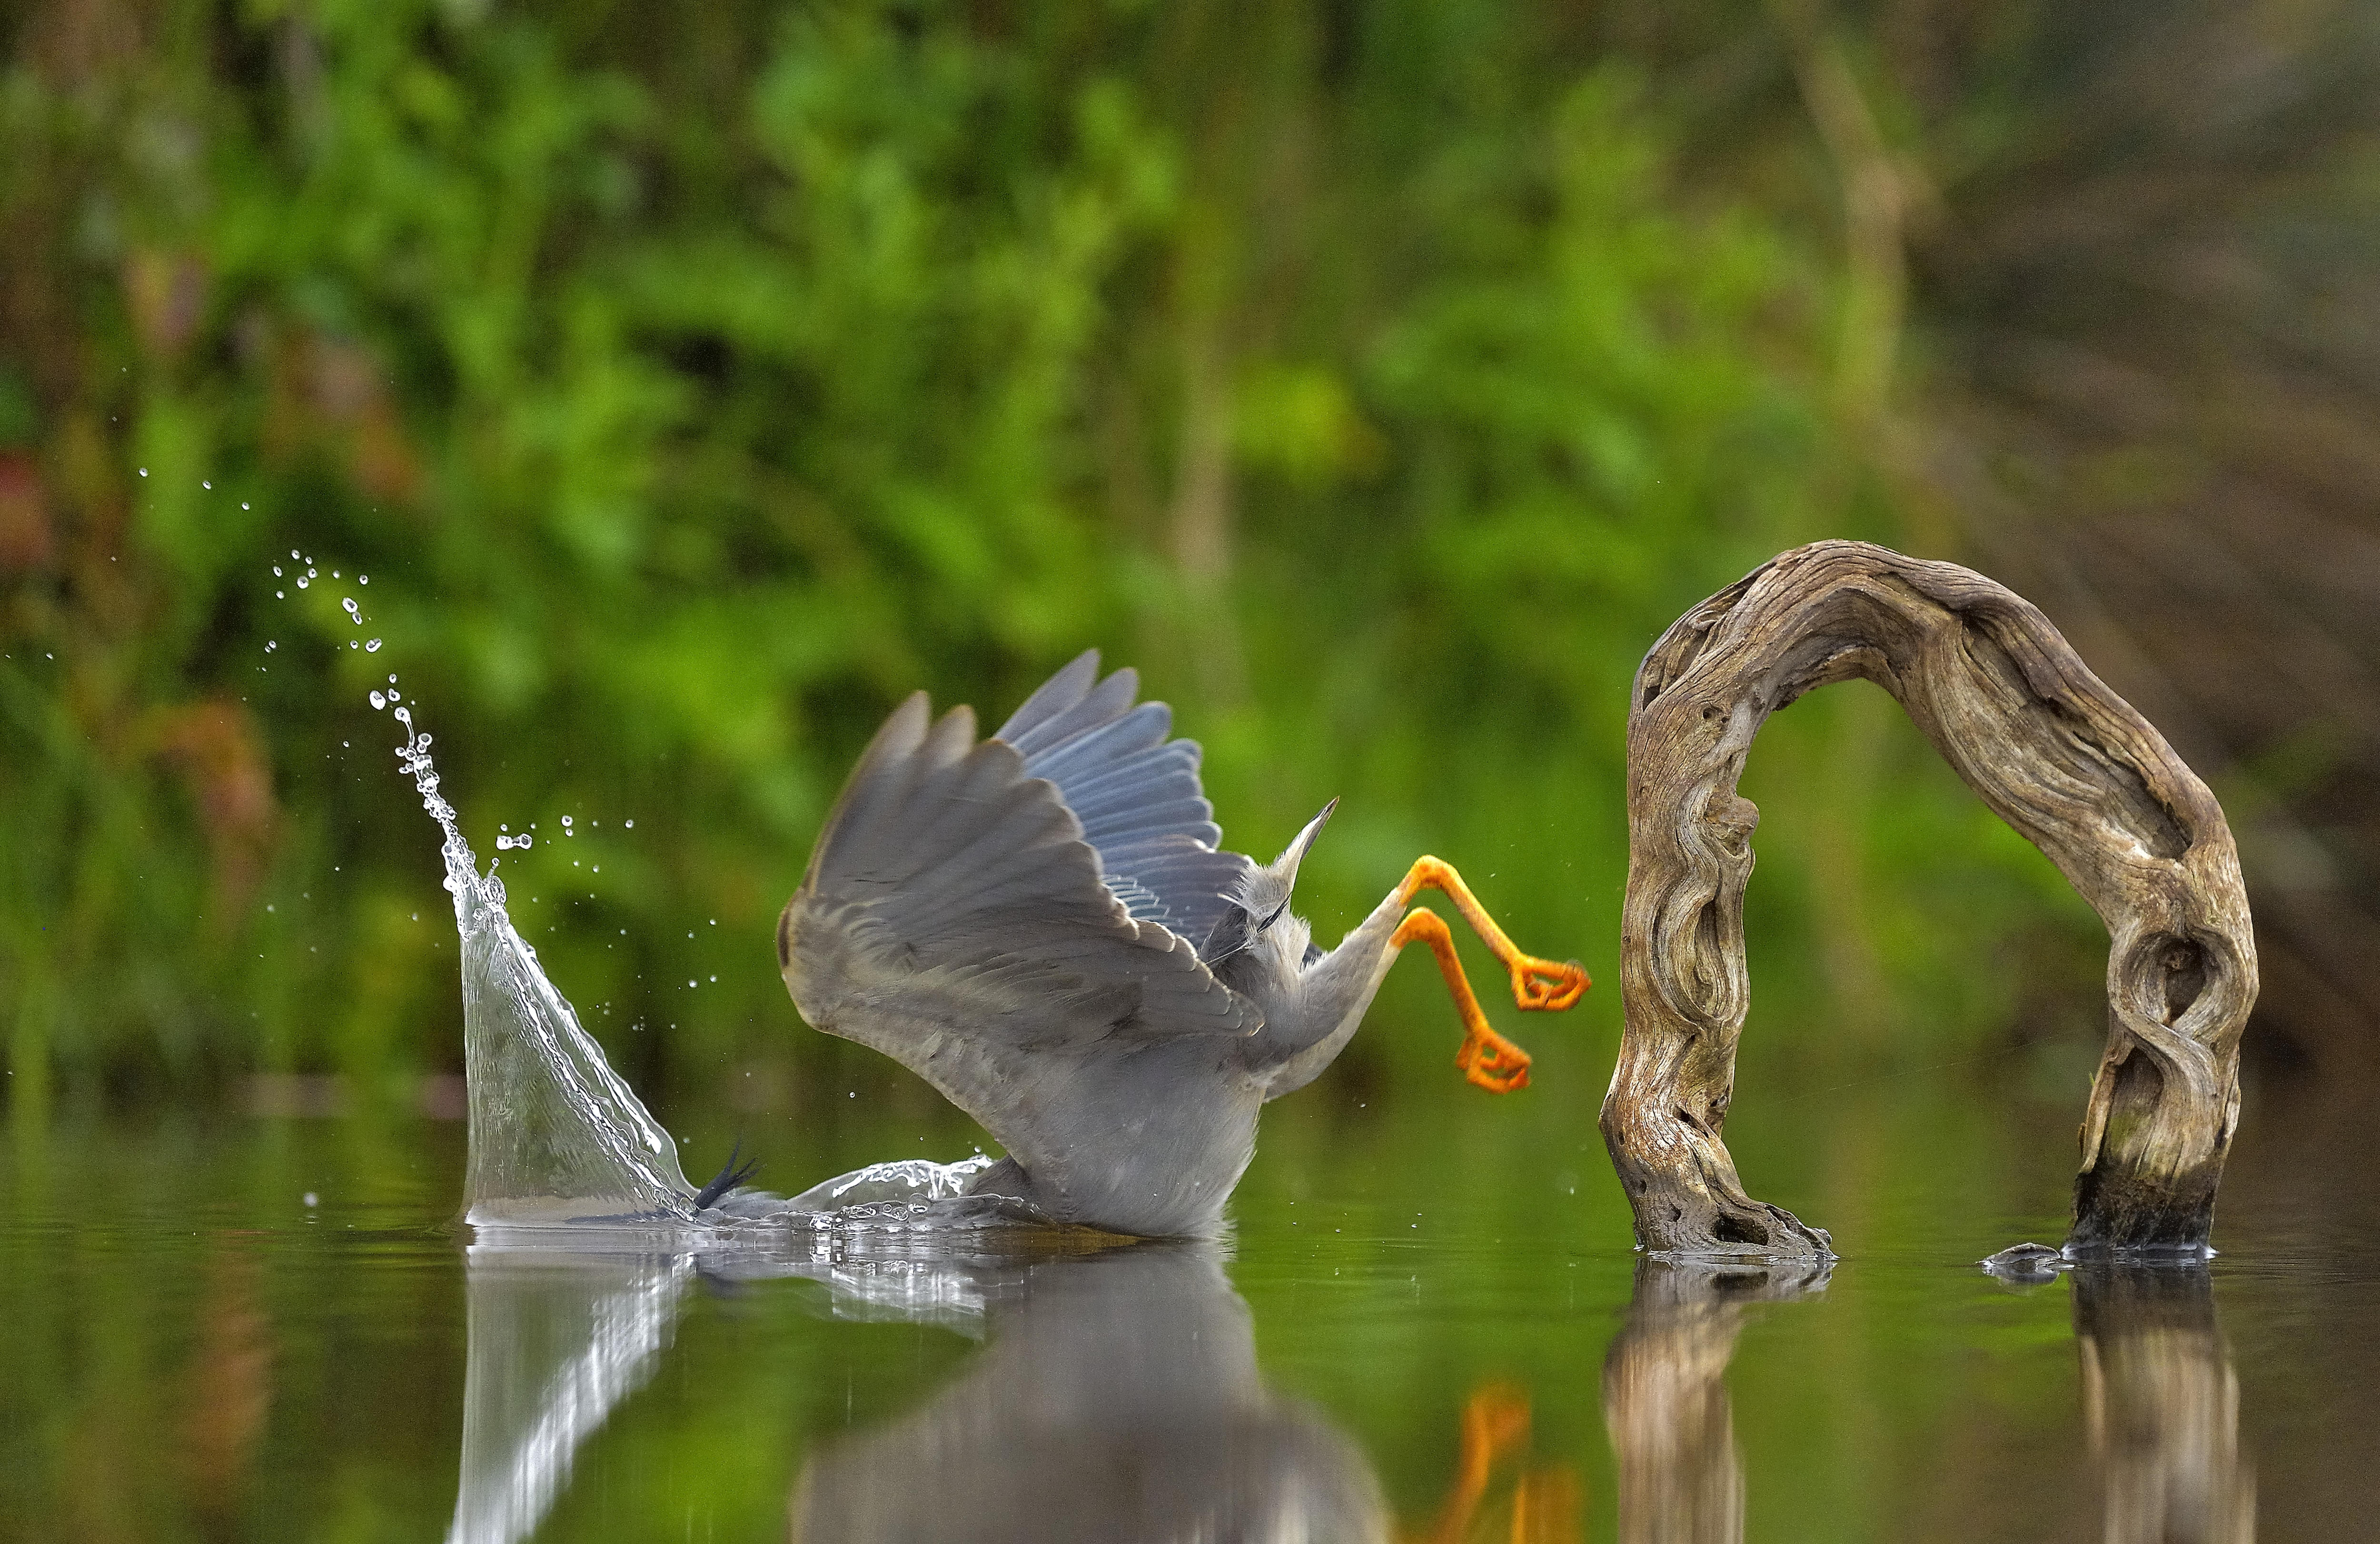 A bird falling off a branch into a lake